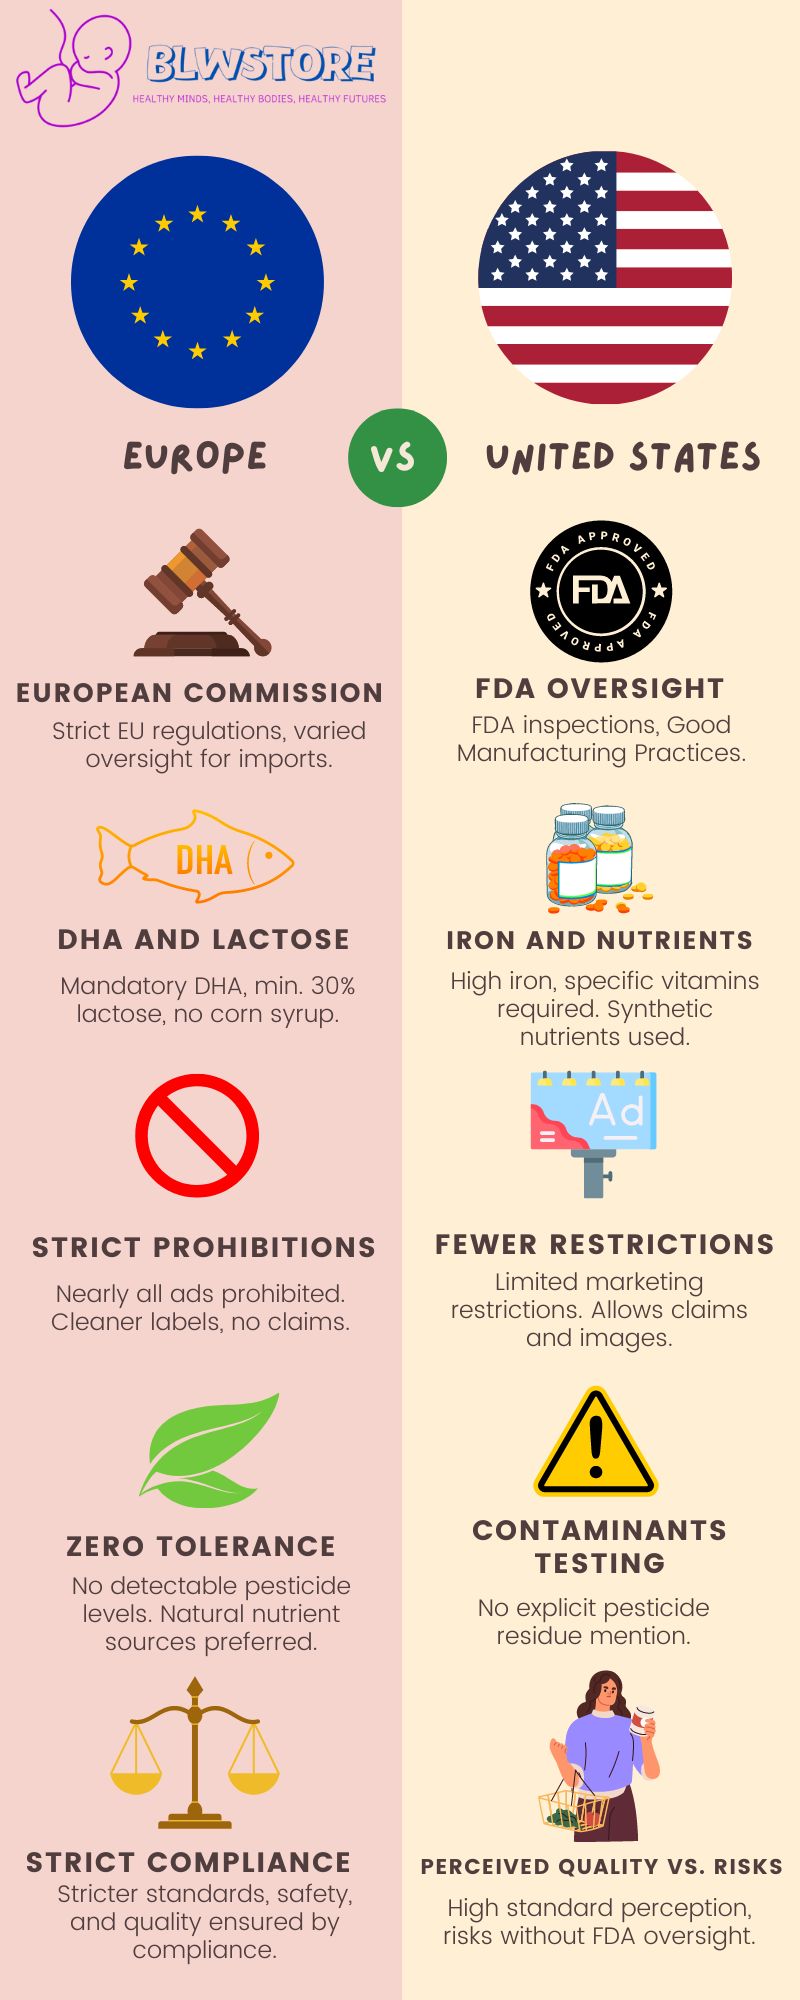 Europe vs United States in Infant Formula Regulations European Commission vs FDA